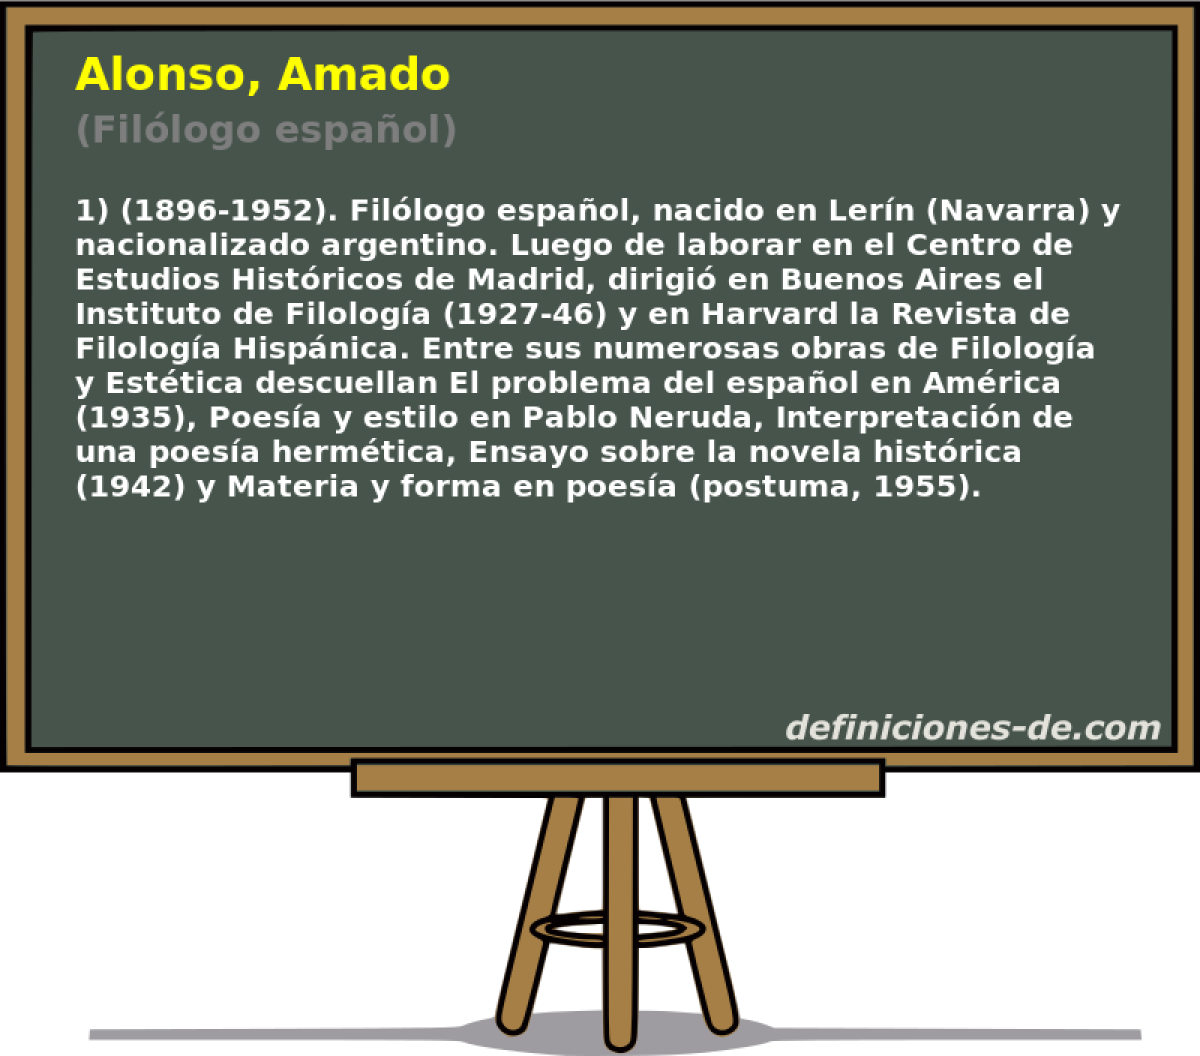 Alonso, Amado (Fillogo espaol)